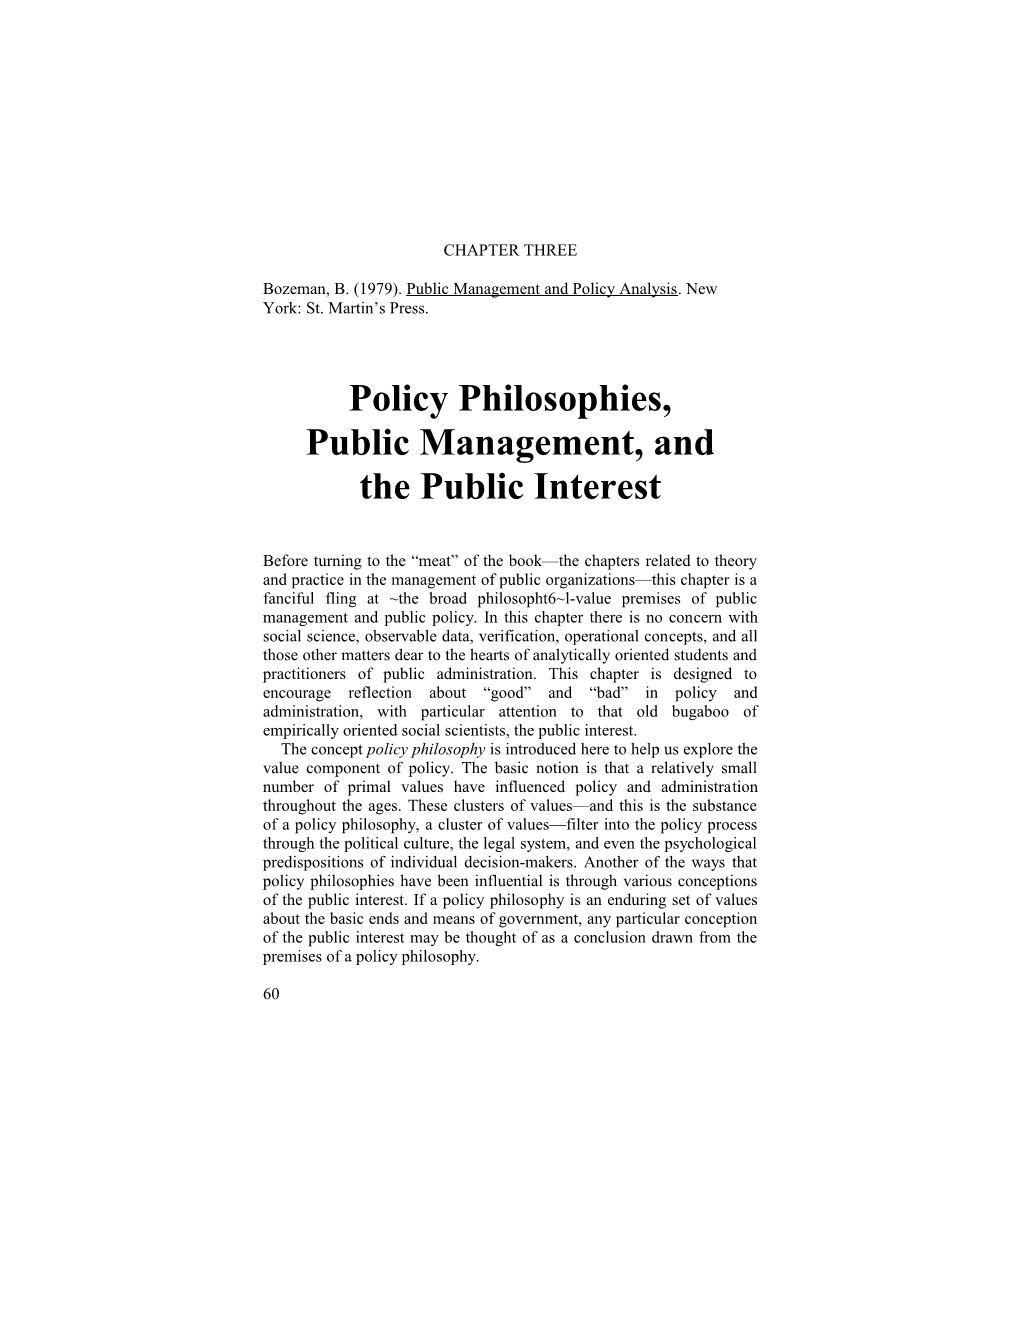 Bozeman, B. (1979). Public Management and Policy Analysis. New York: St. Martin S Press